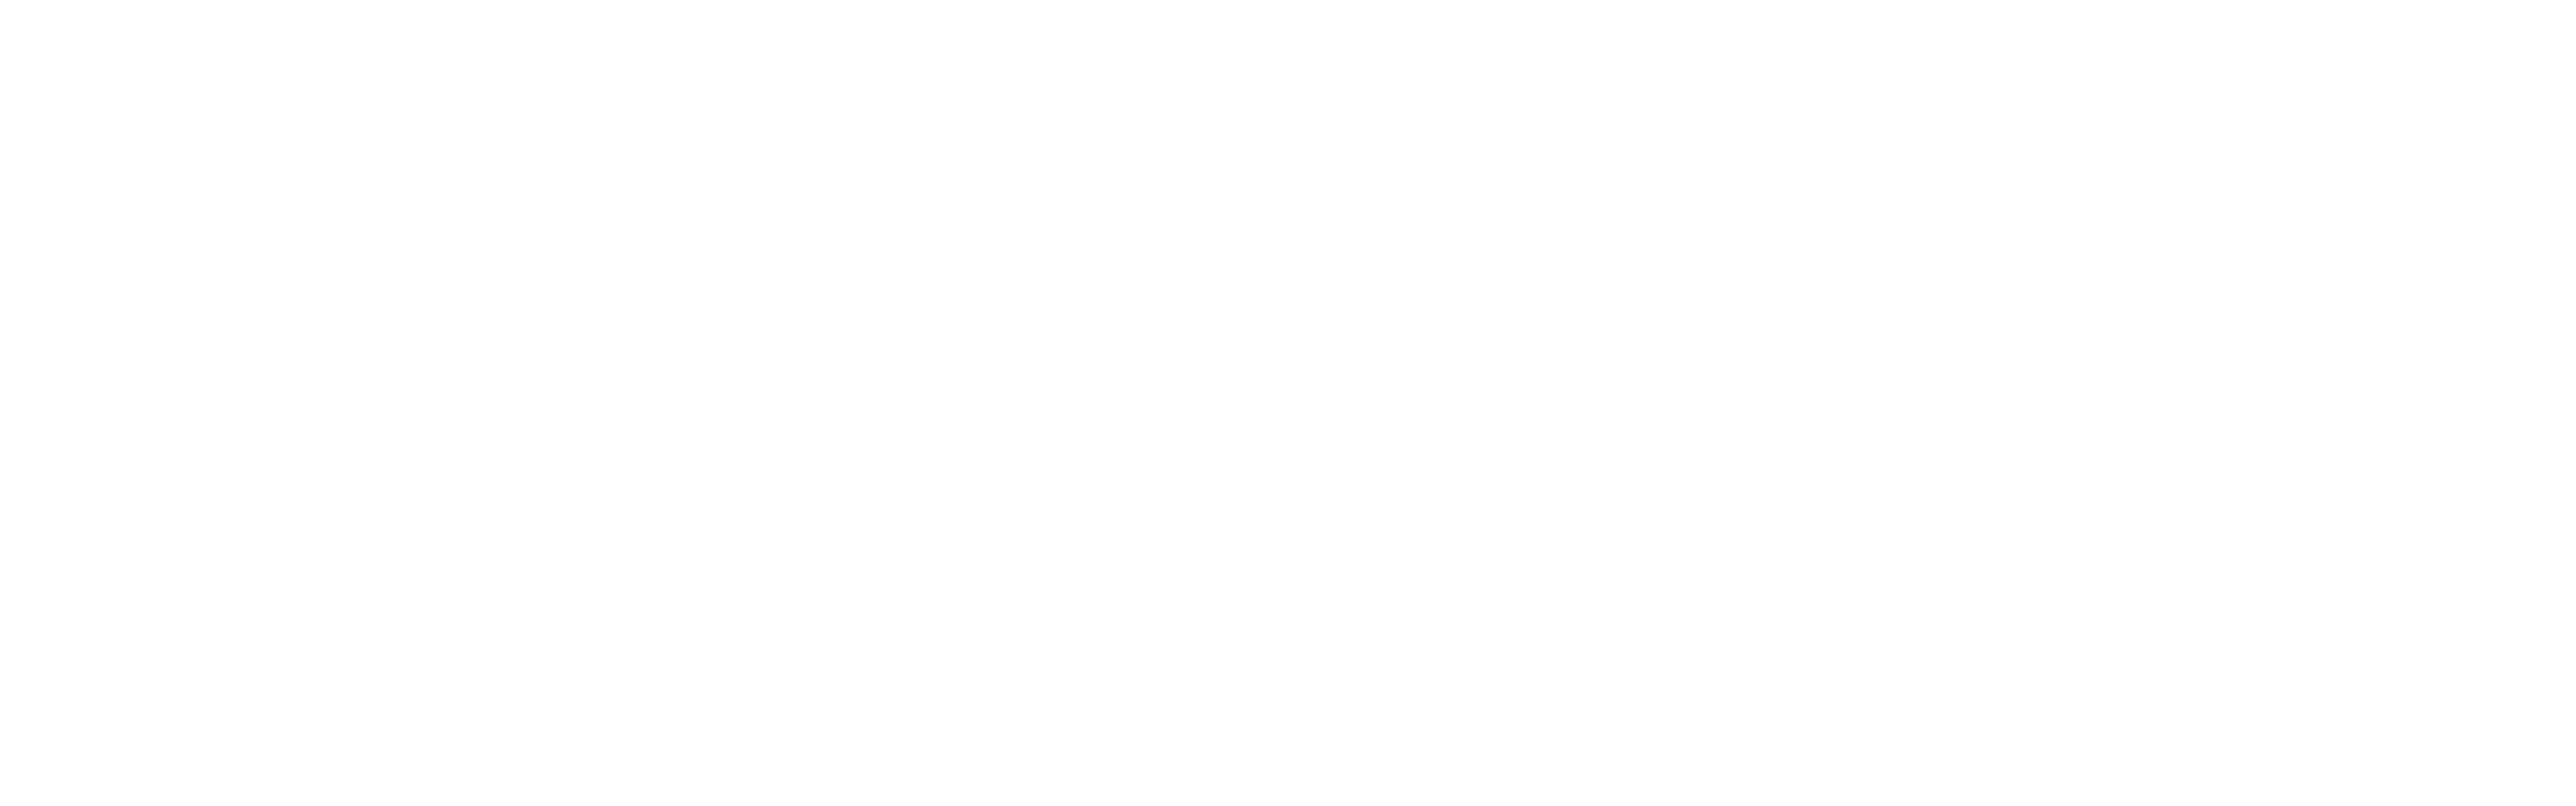 Logo West aventure blanc